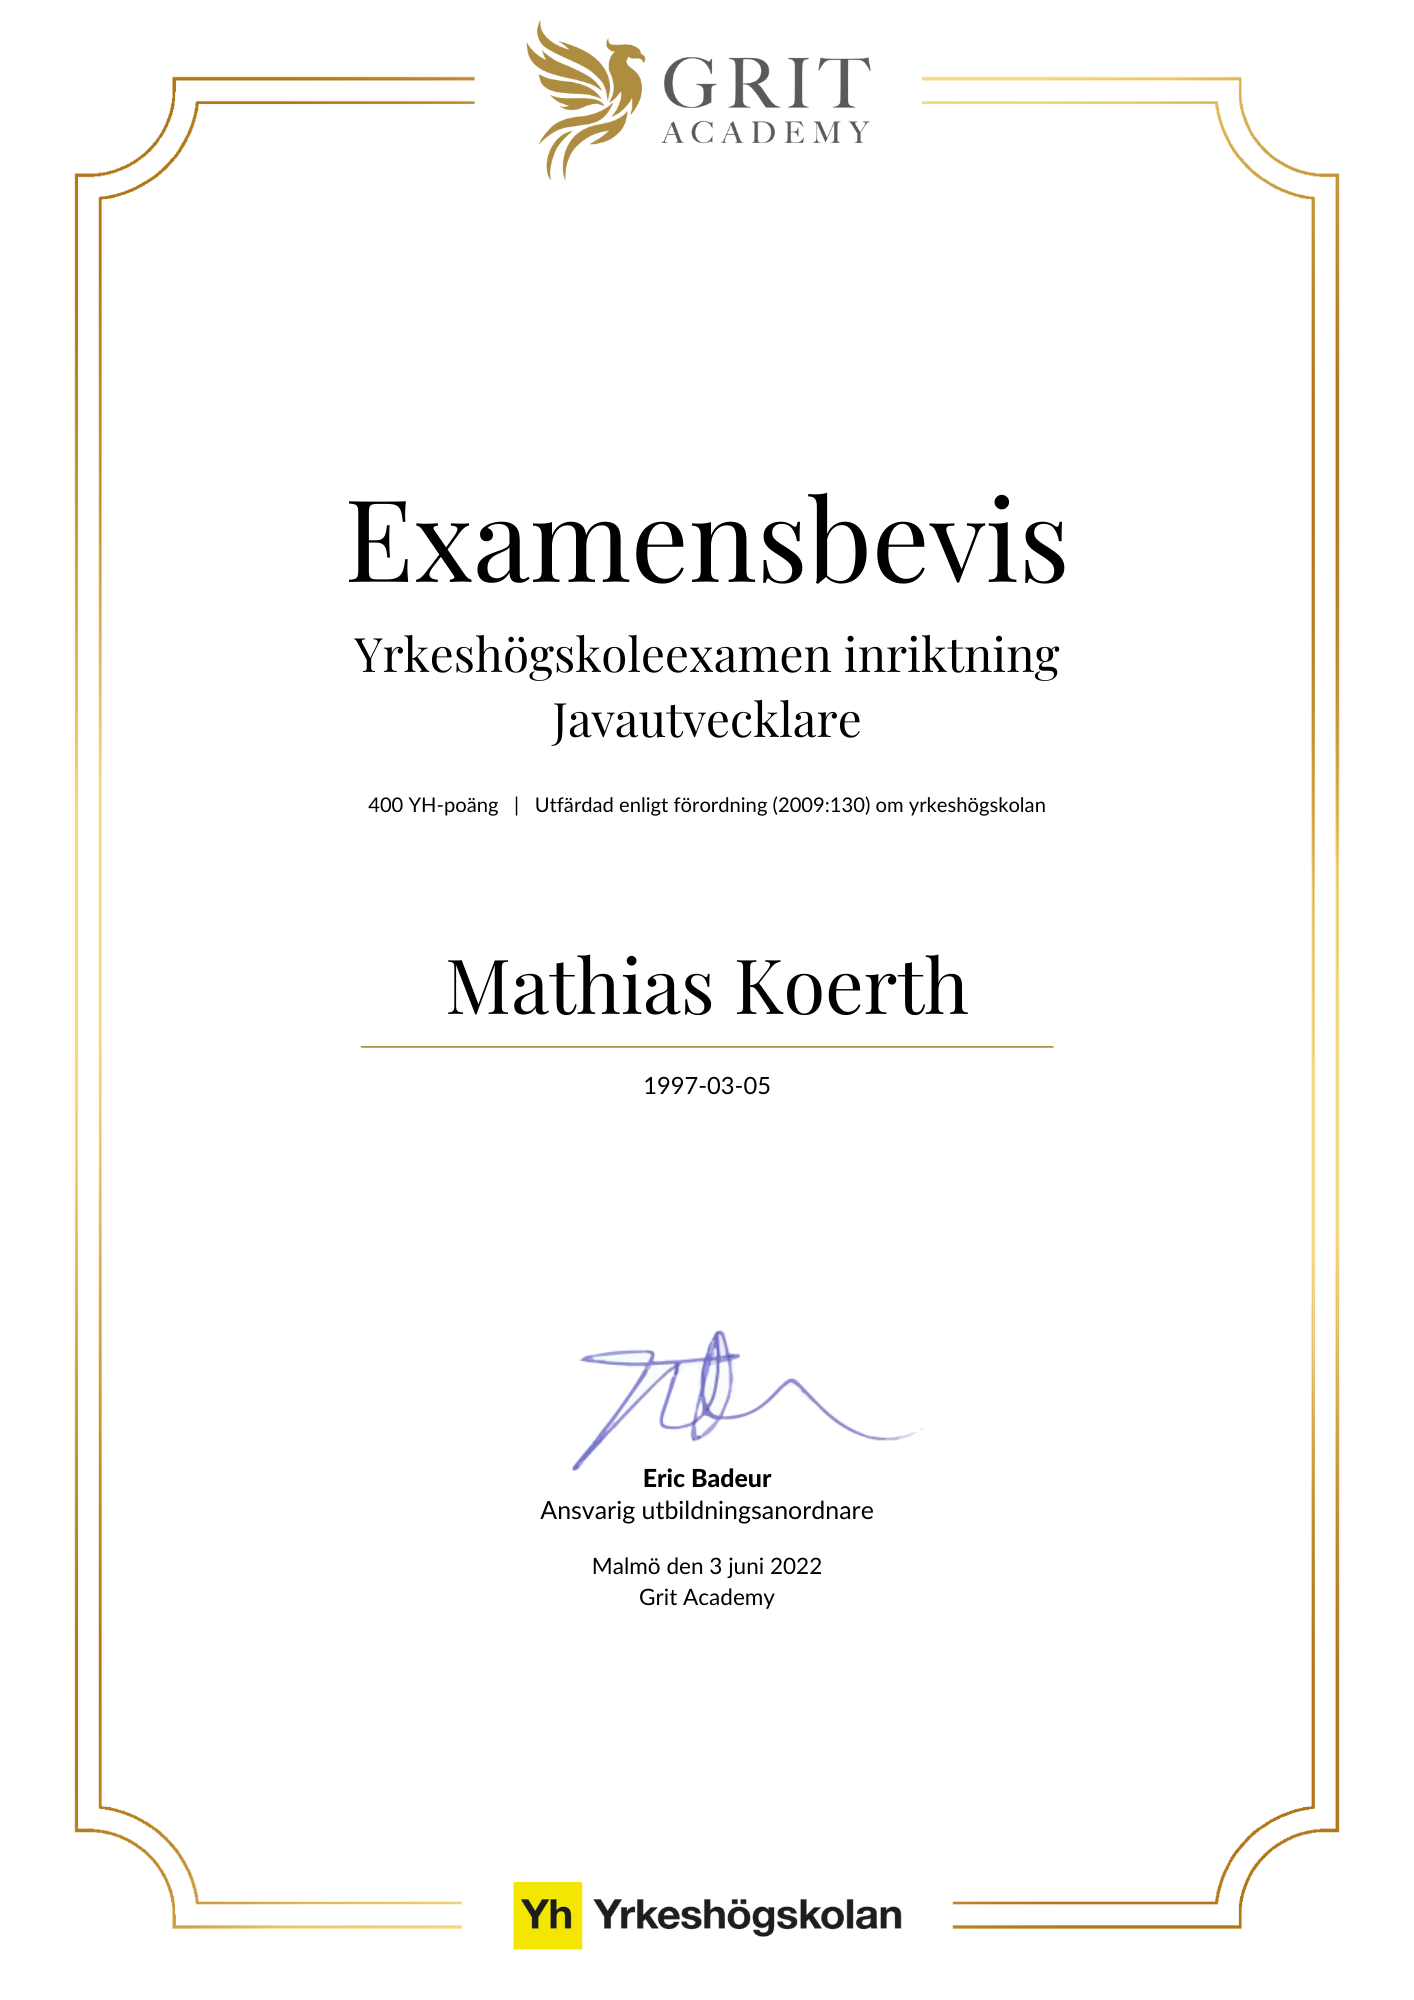 Examensbevis Mathias Koerth - 1